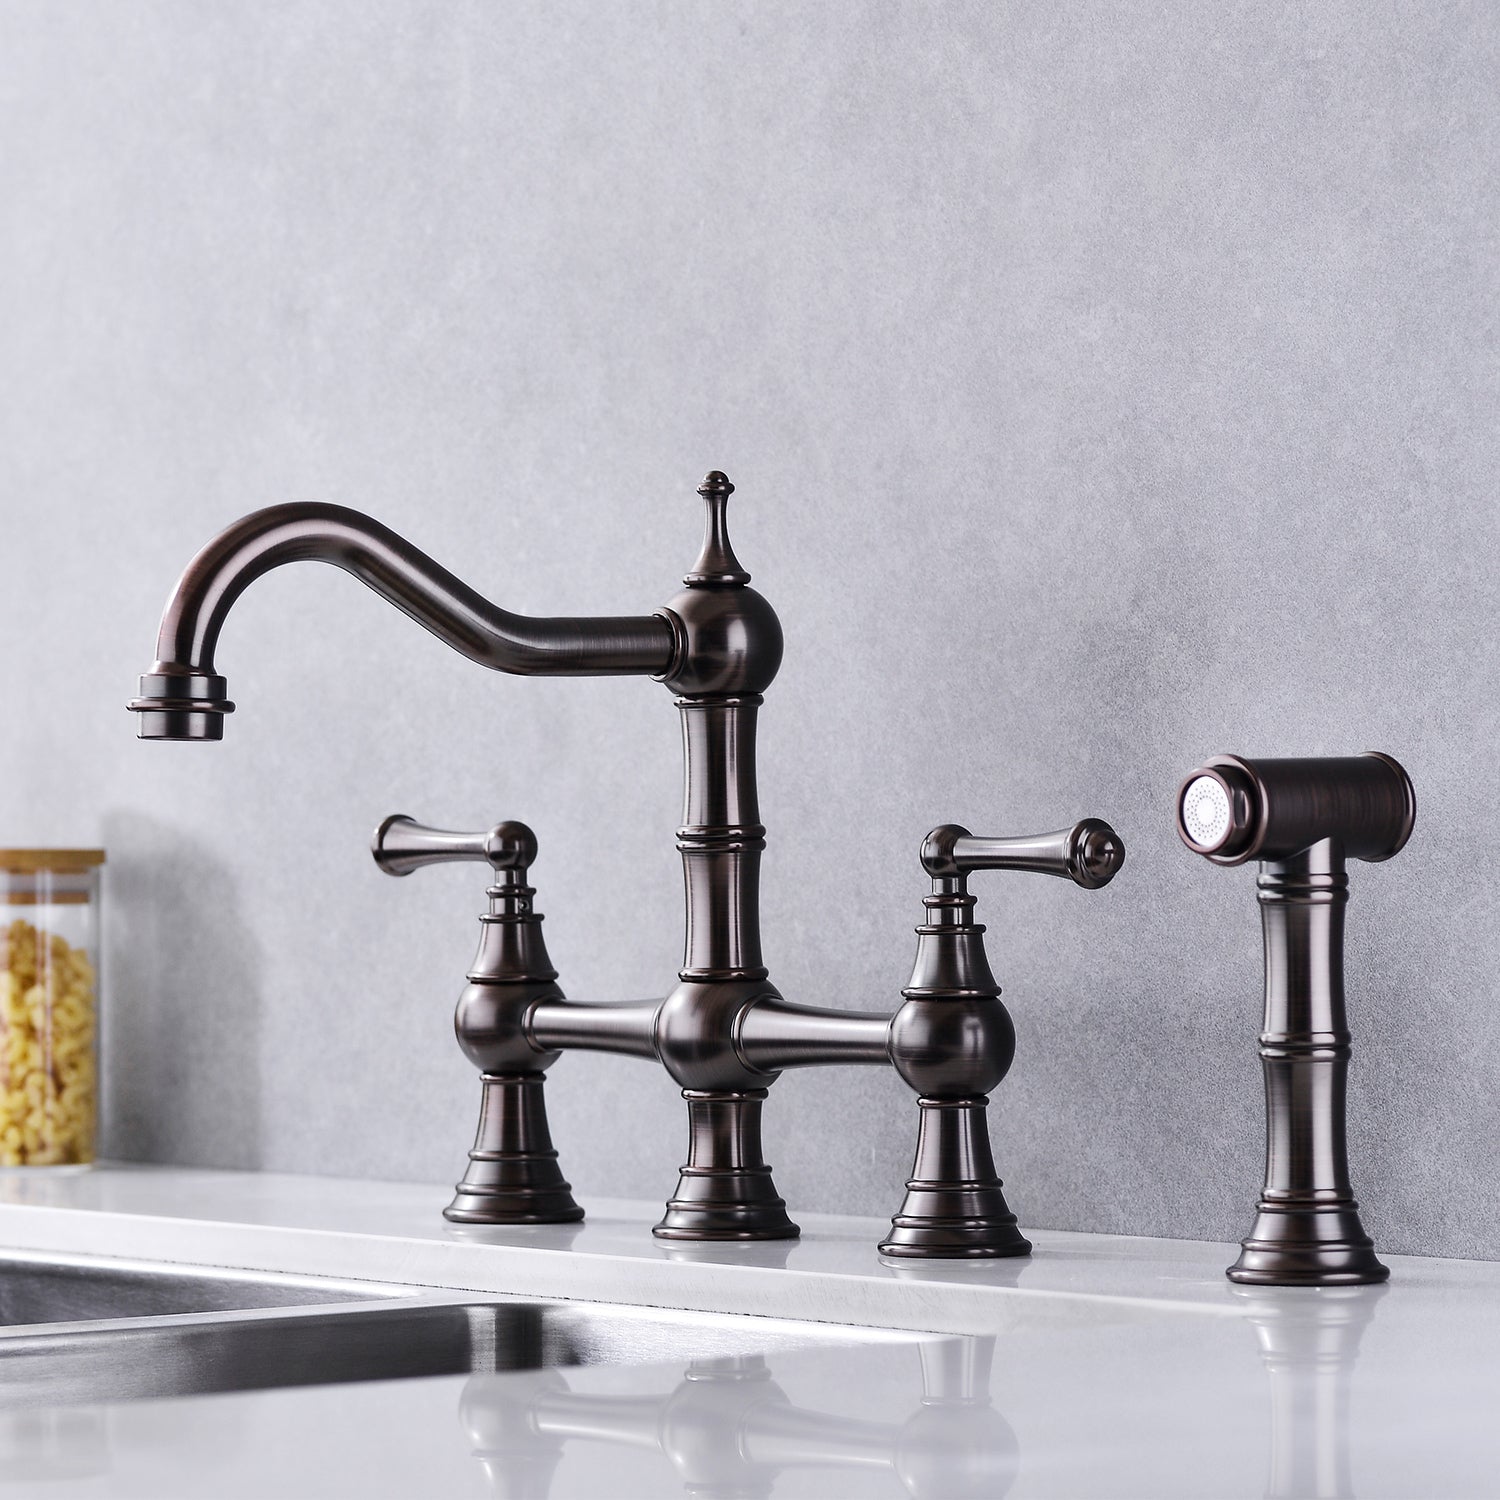 8 Inch Centerset Bridge Kitchen Faucet With Brass